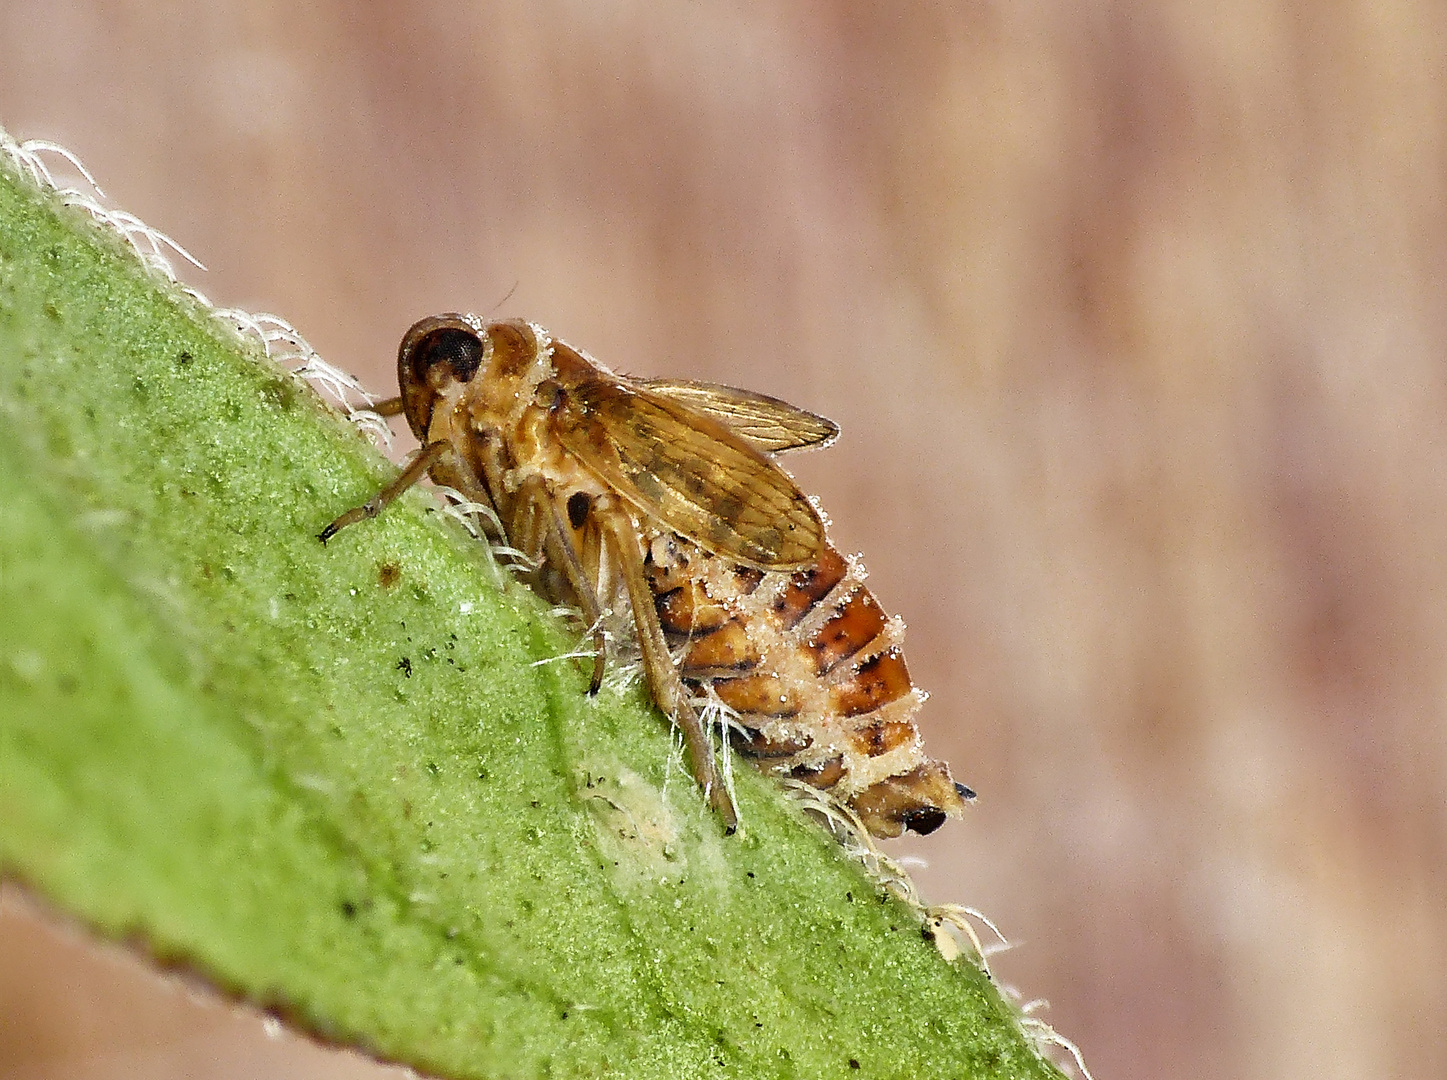 Tote Spornzikade (Delphacidae) auf Oregano-Blatt